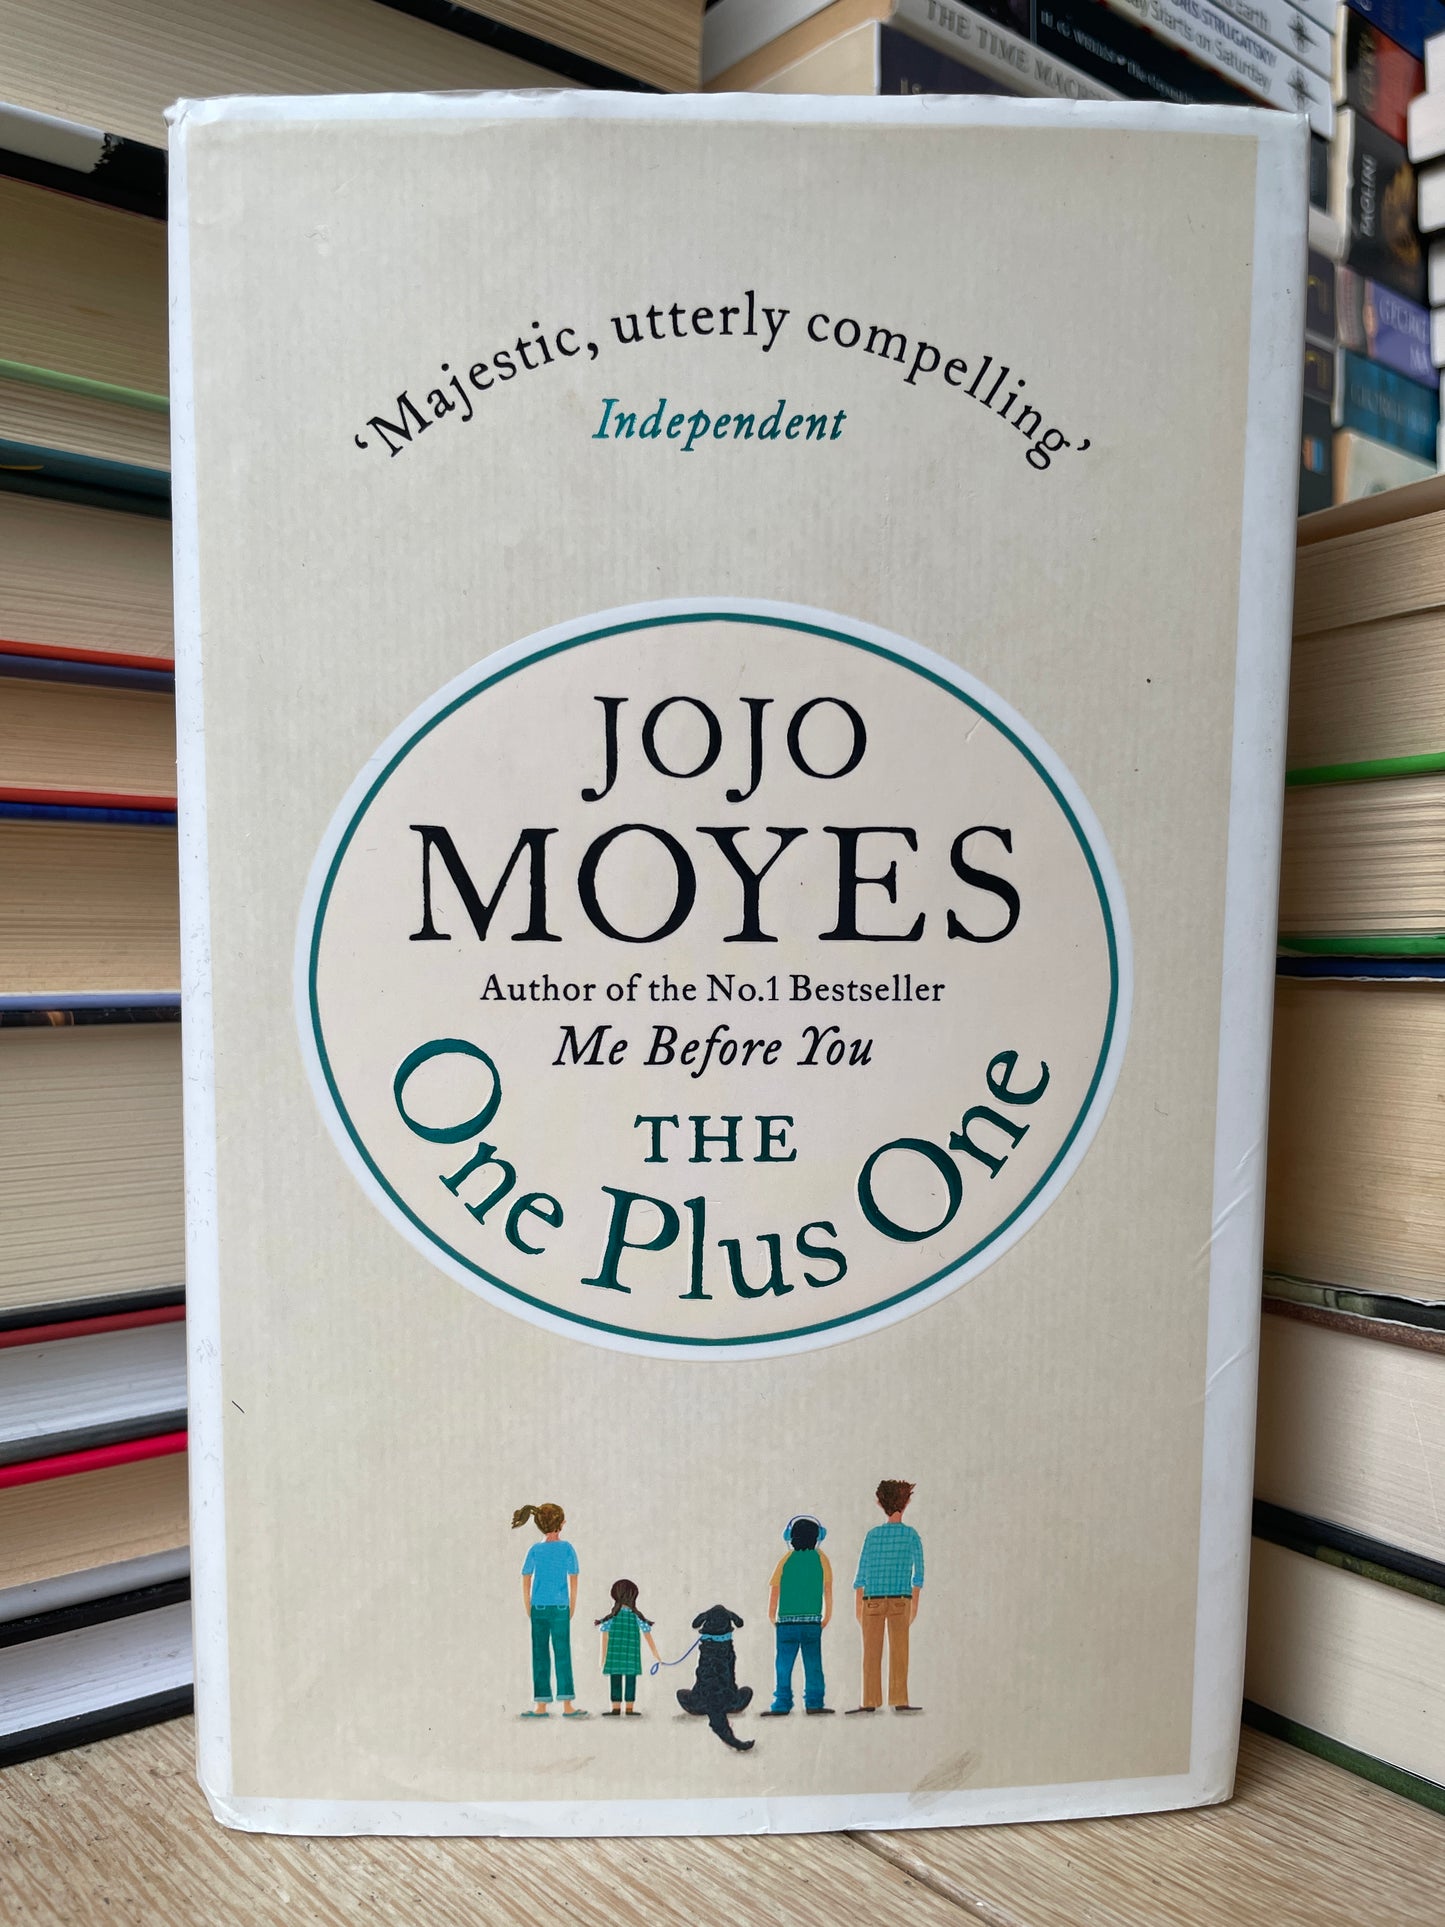 Jojo Moyes - The One Plus One